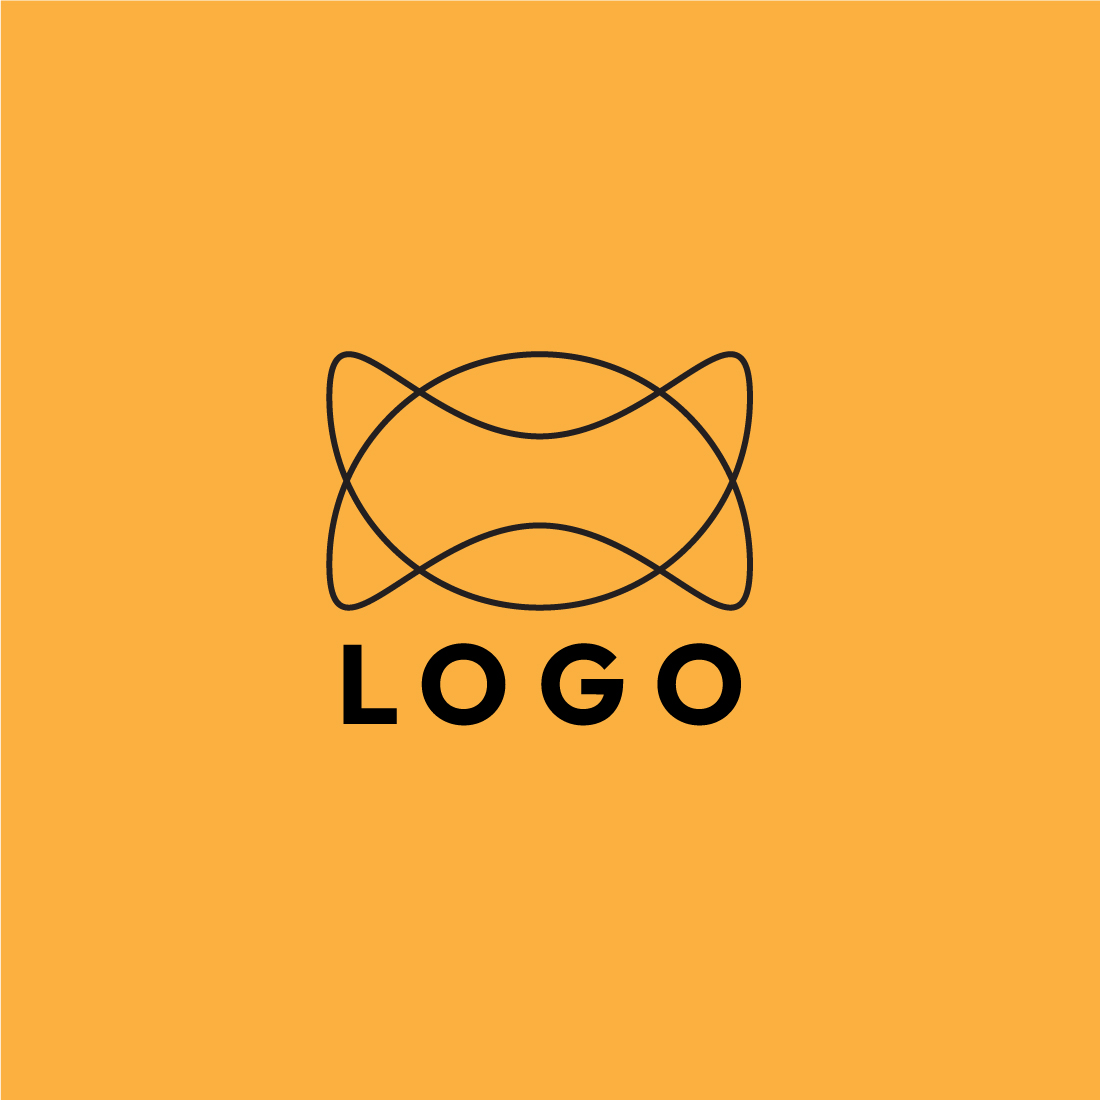 Beautiful Minimal and minimalist Logo Design for Company cover image.